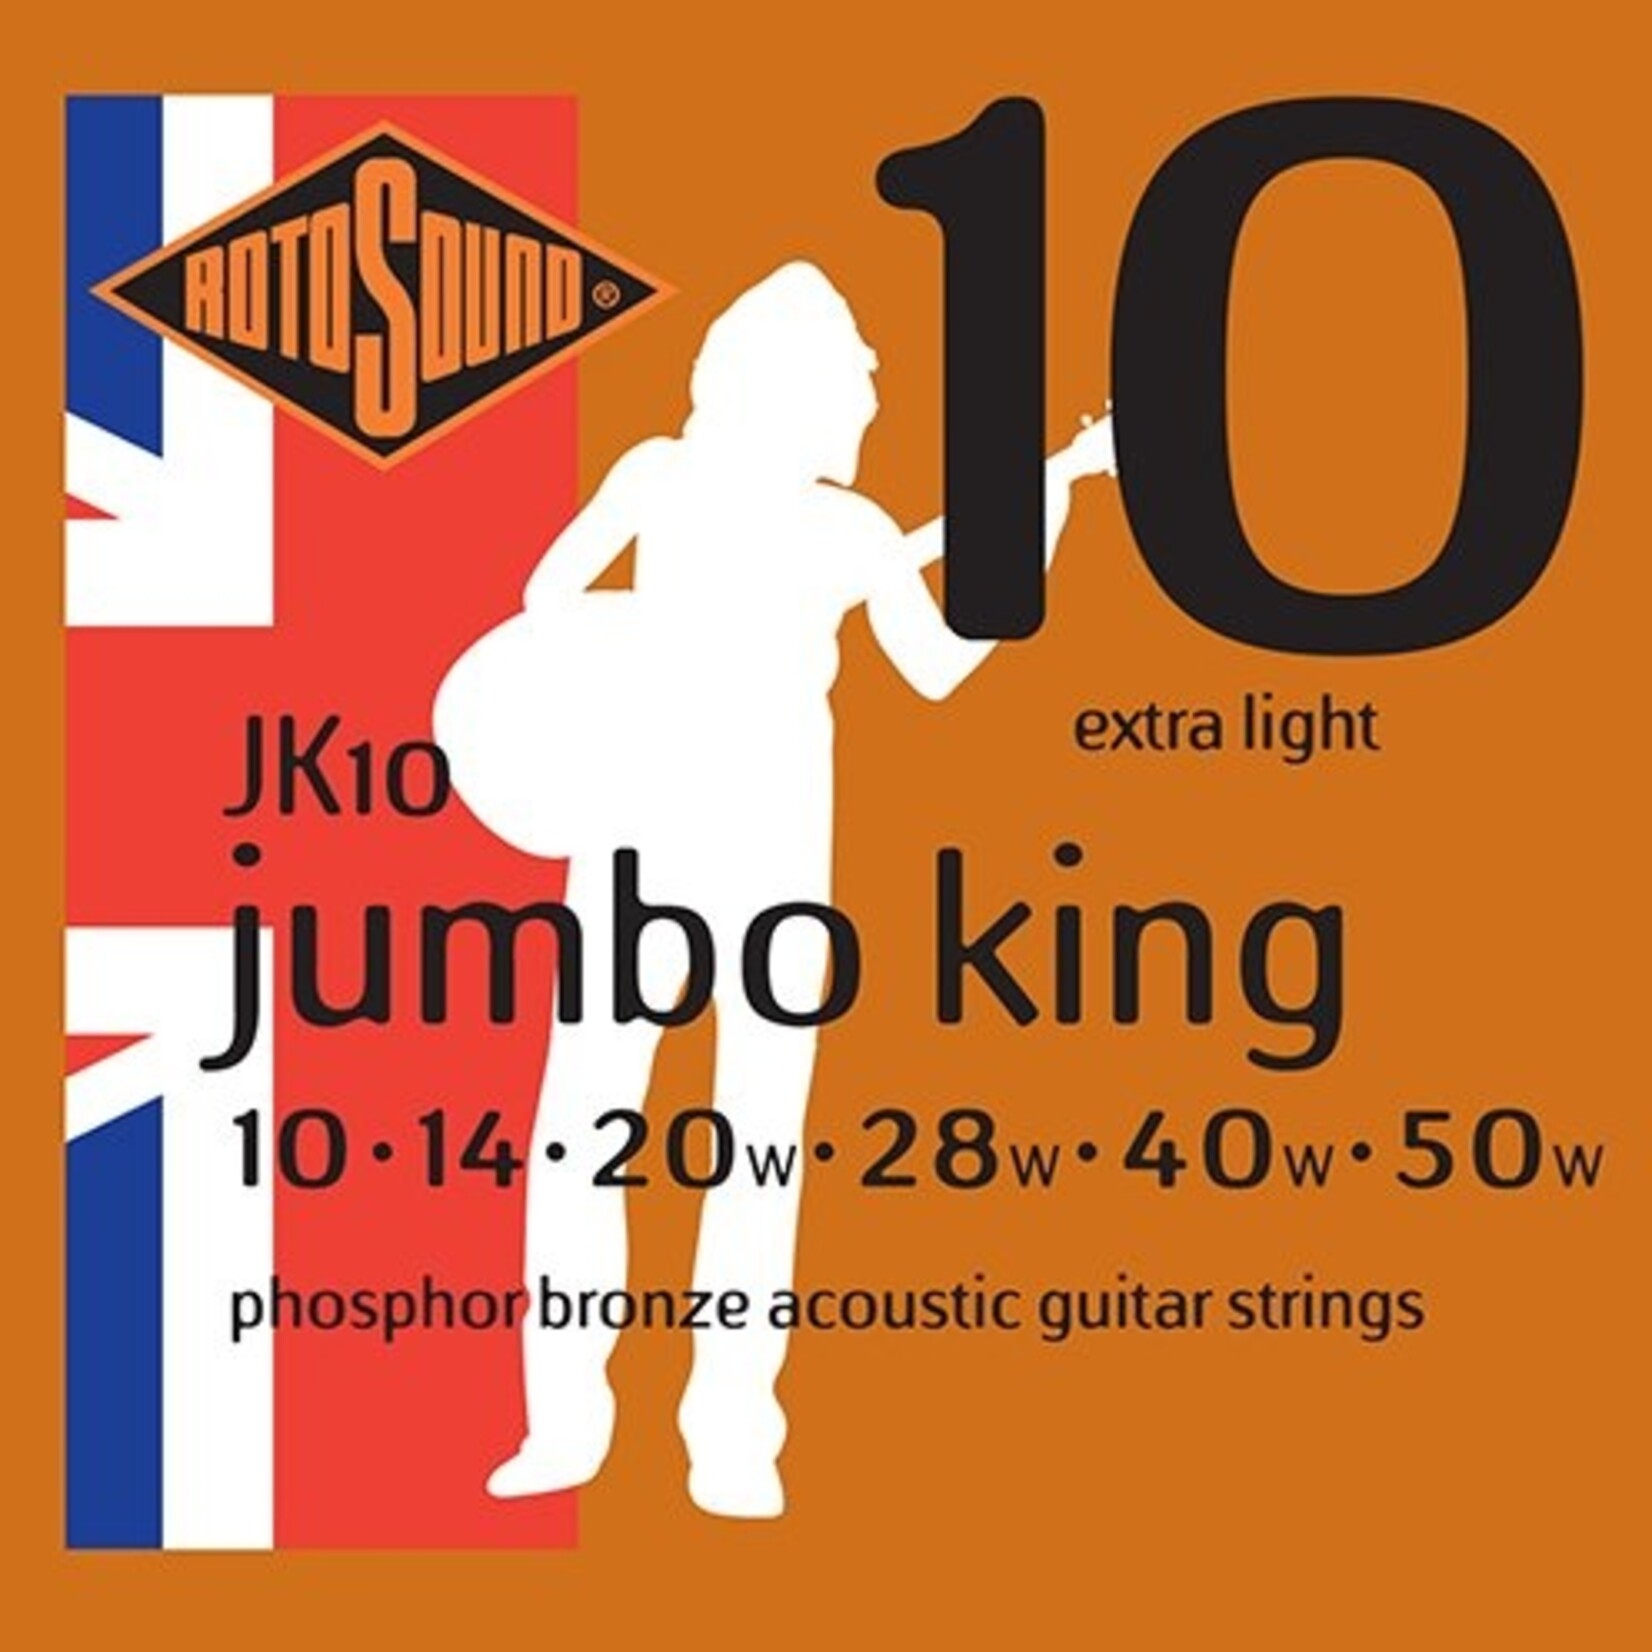 Rotosound JK10 Jumbo King Acoustic Guitar Strings (10-50)